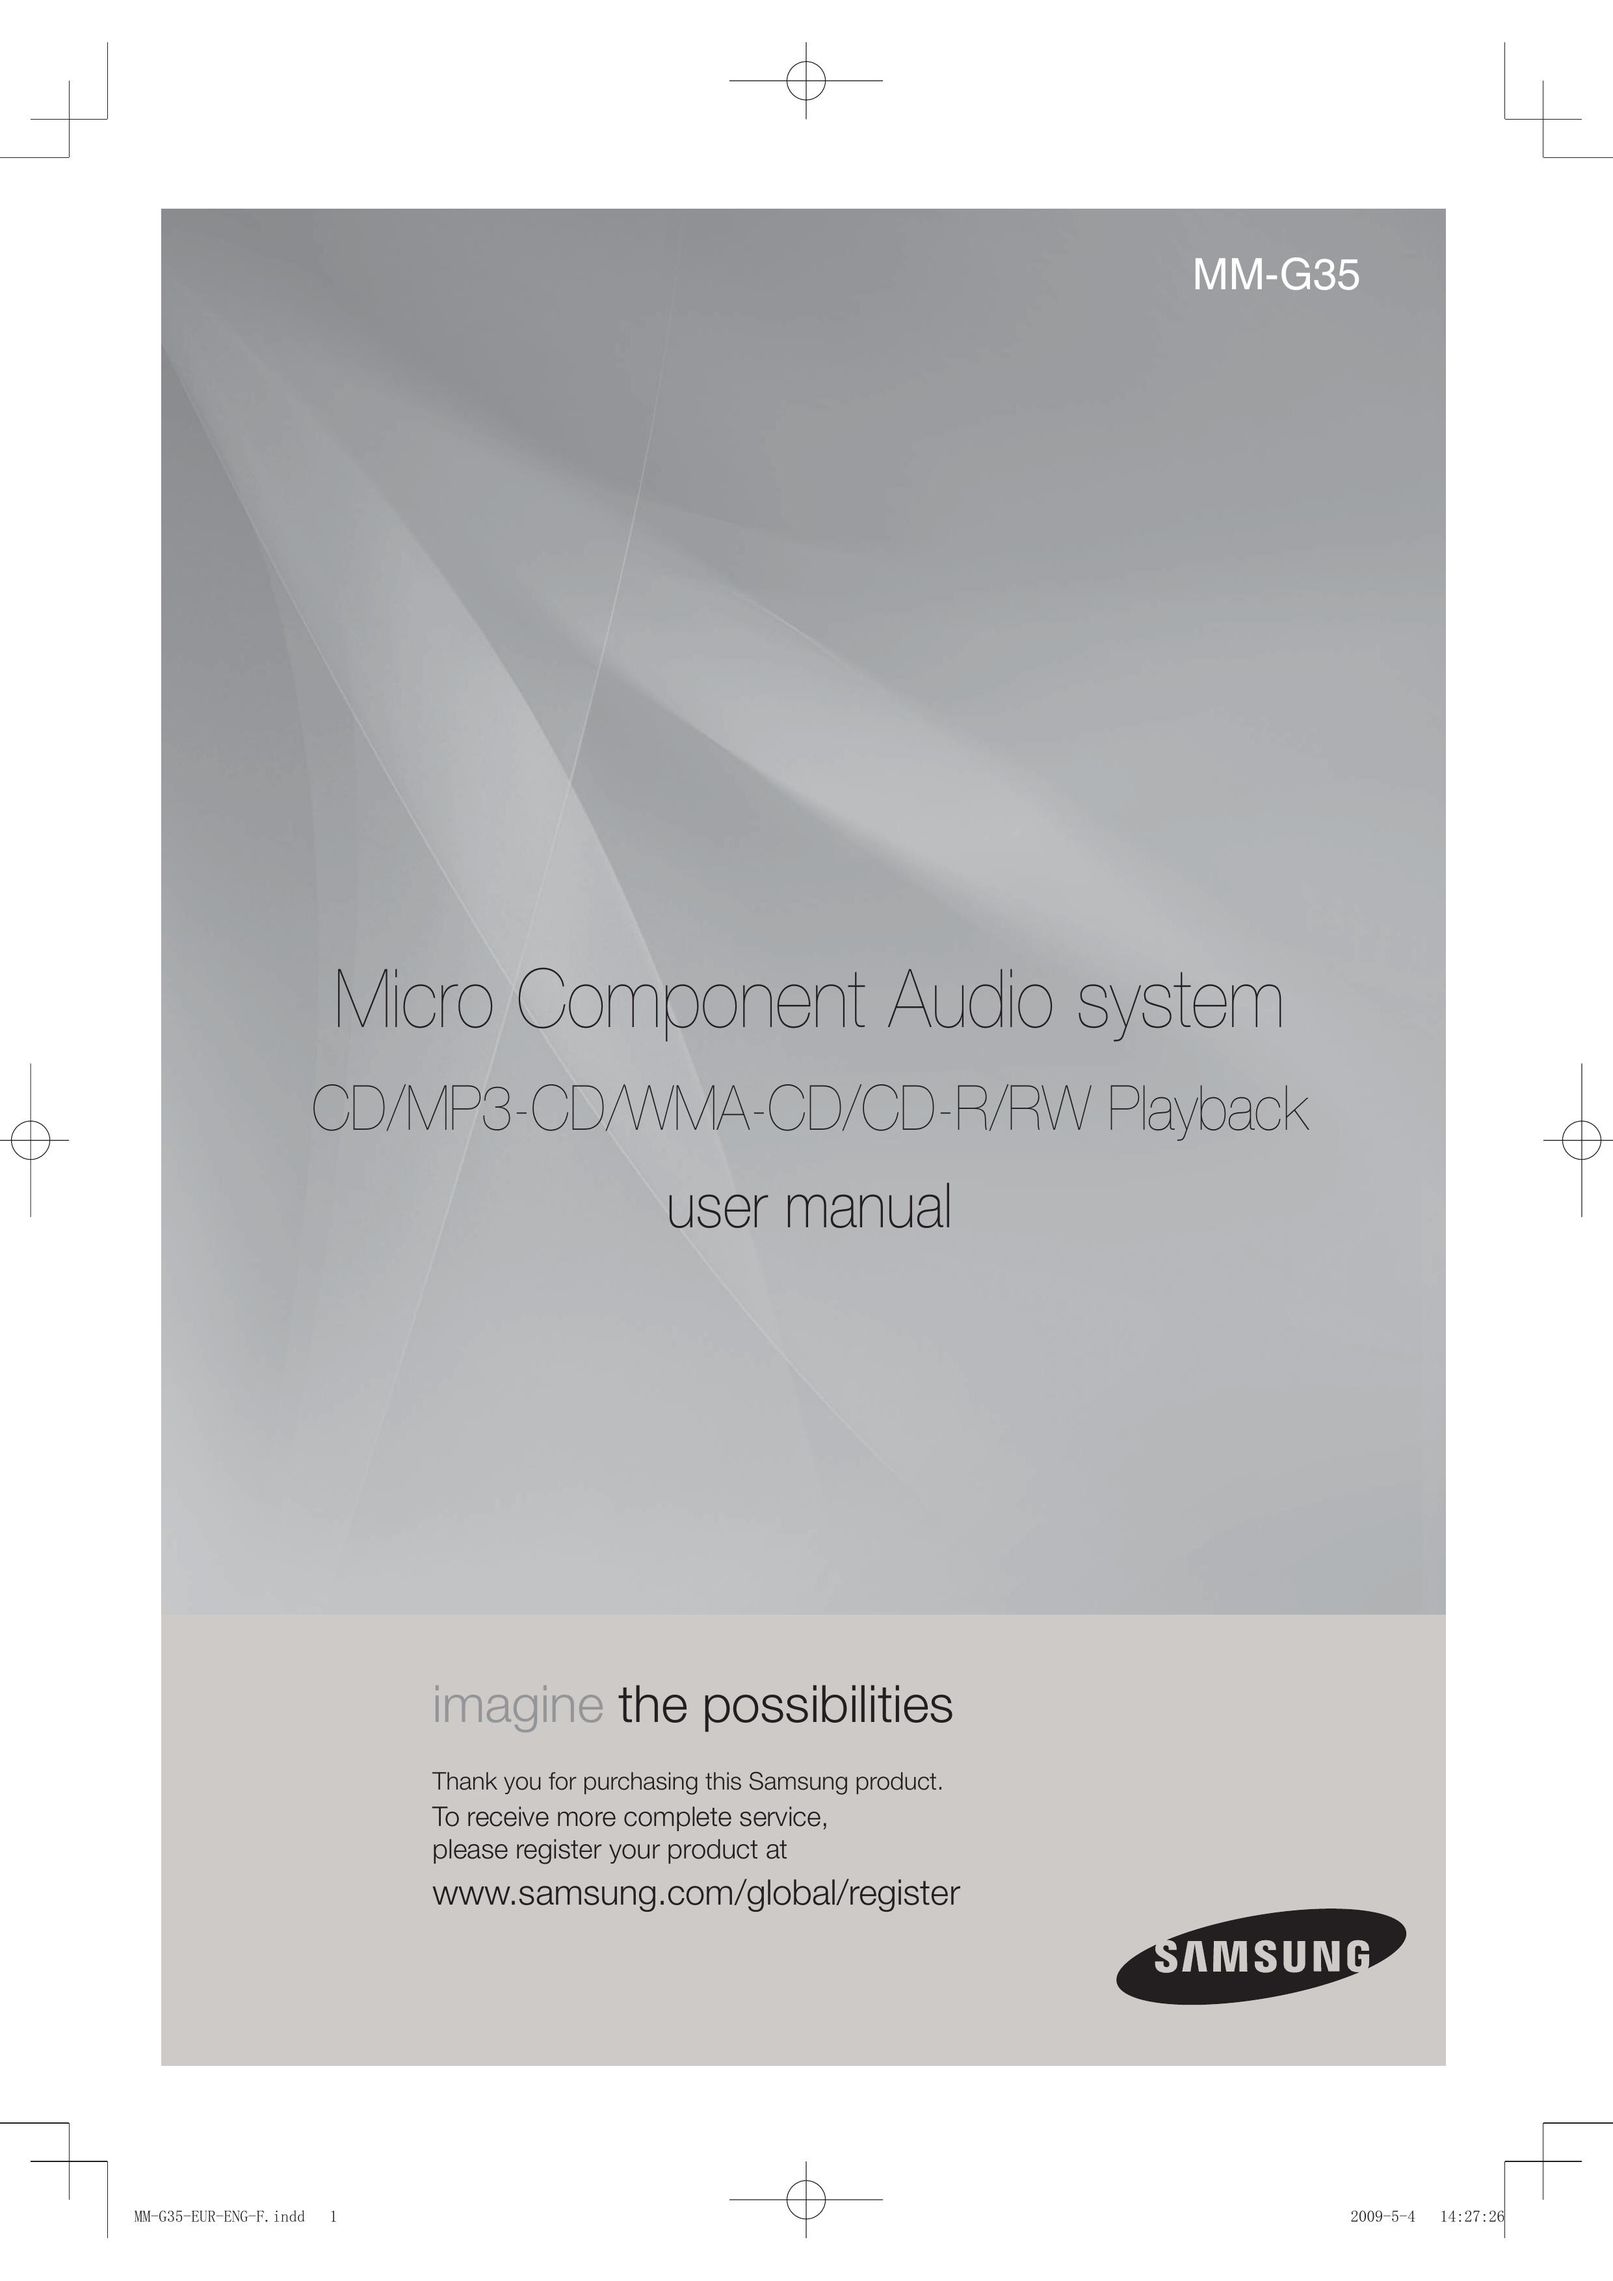 Samsung MM-G35 CD Player User Manual